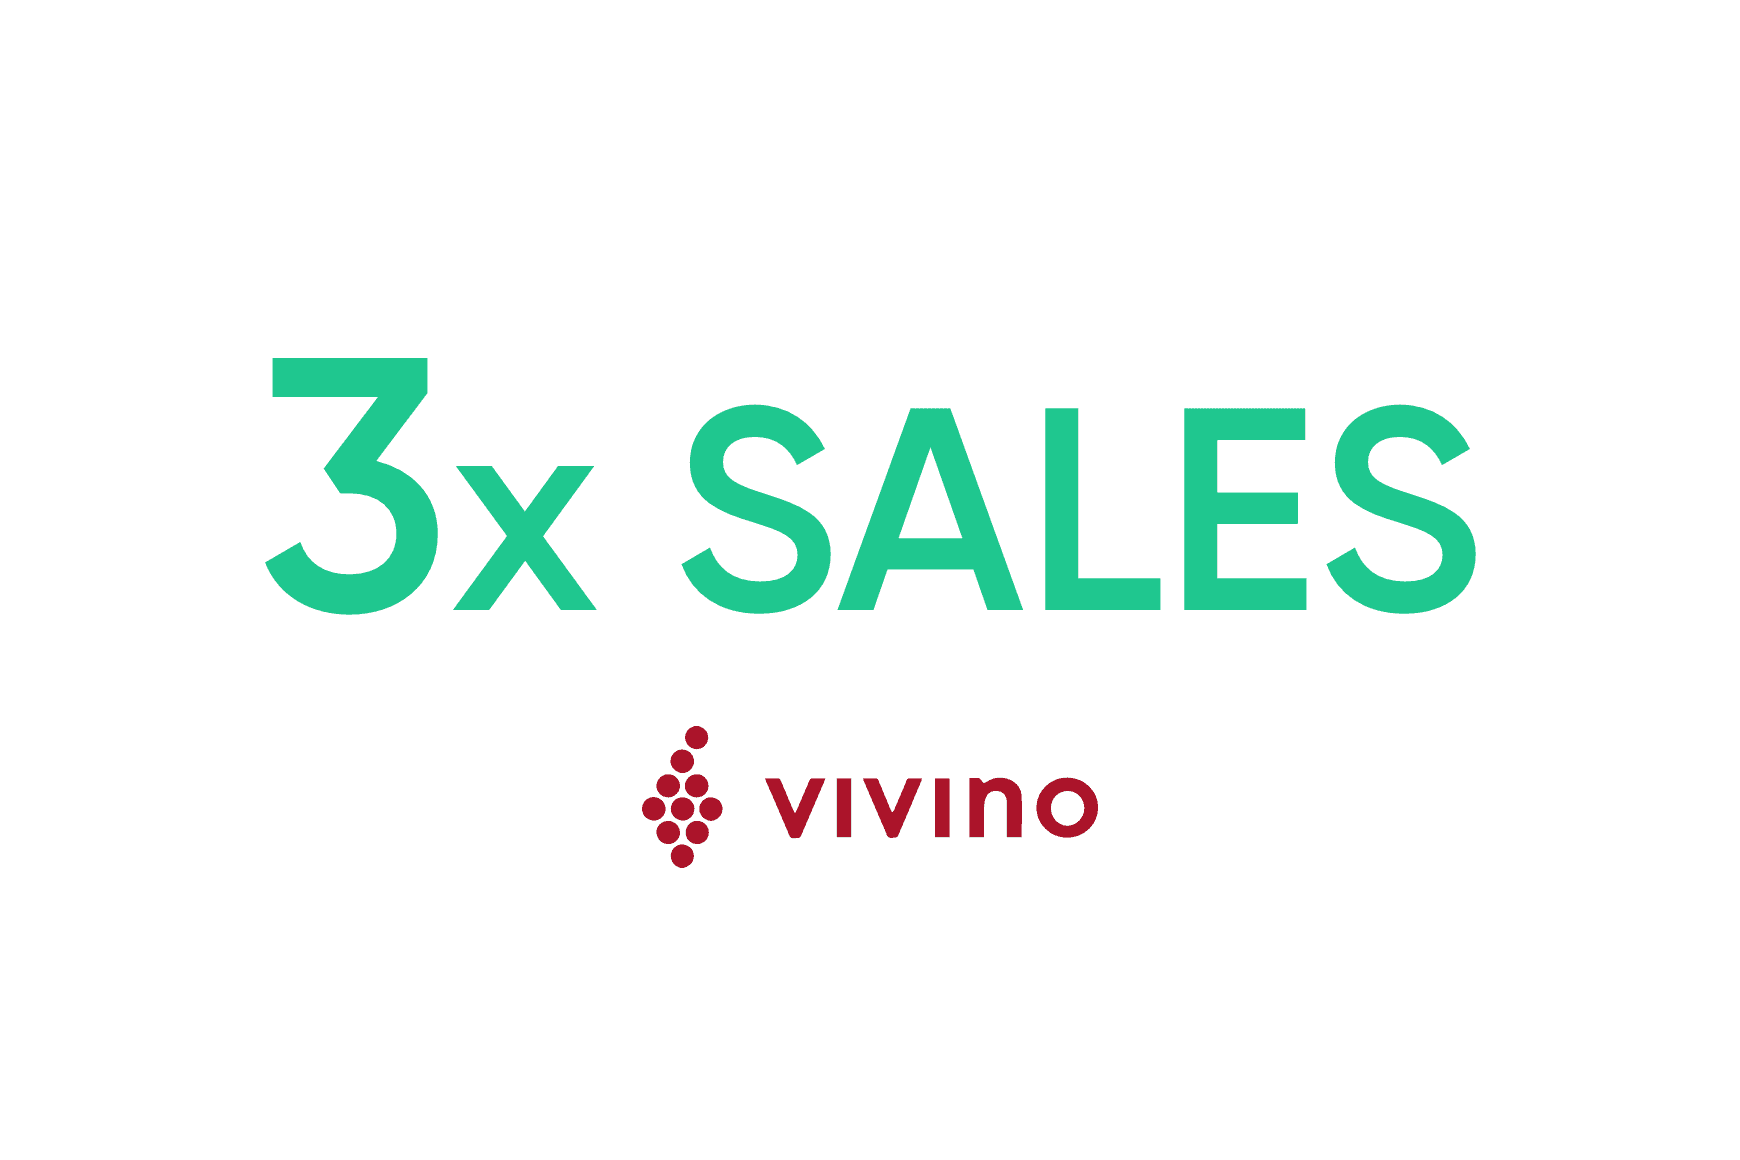 Vivino: Tripled sales while improving CSAT